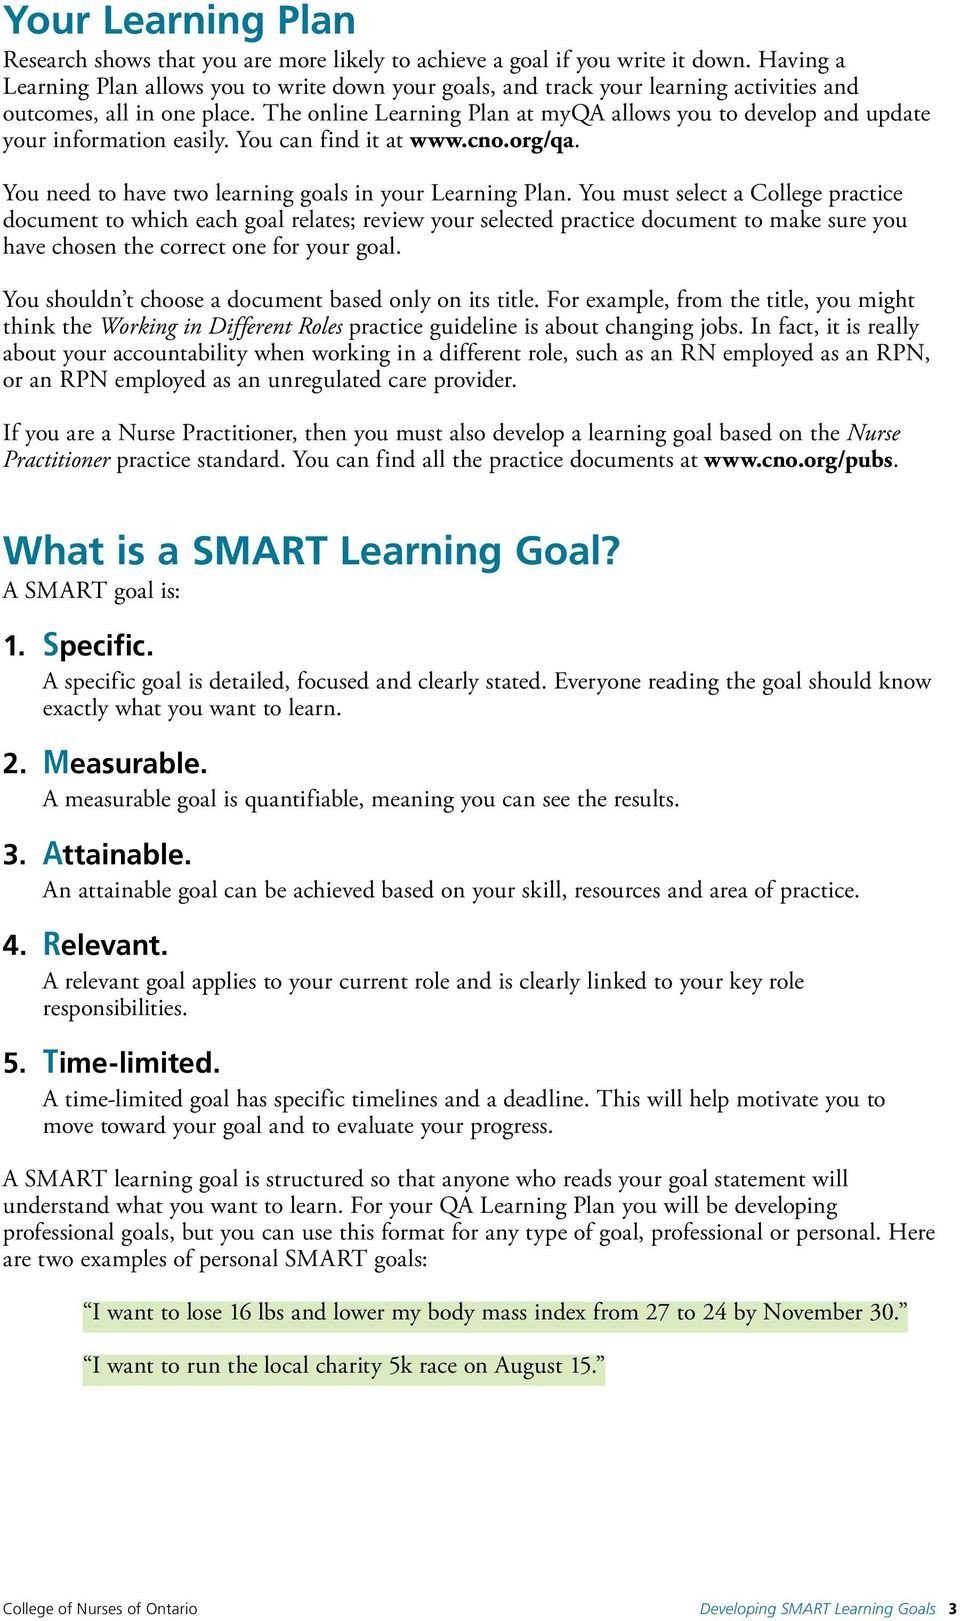 9 10 personal smart goals examples